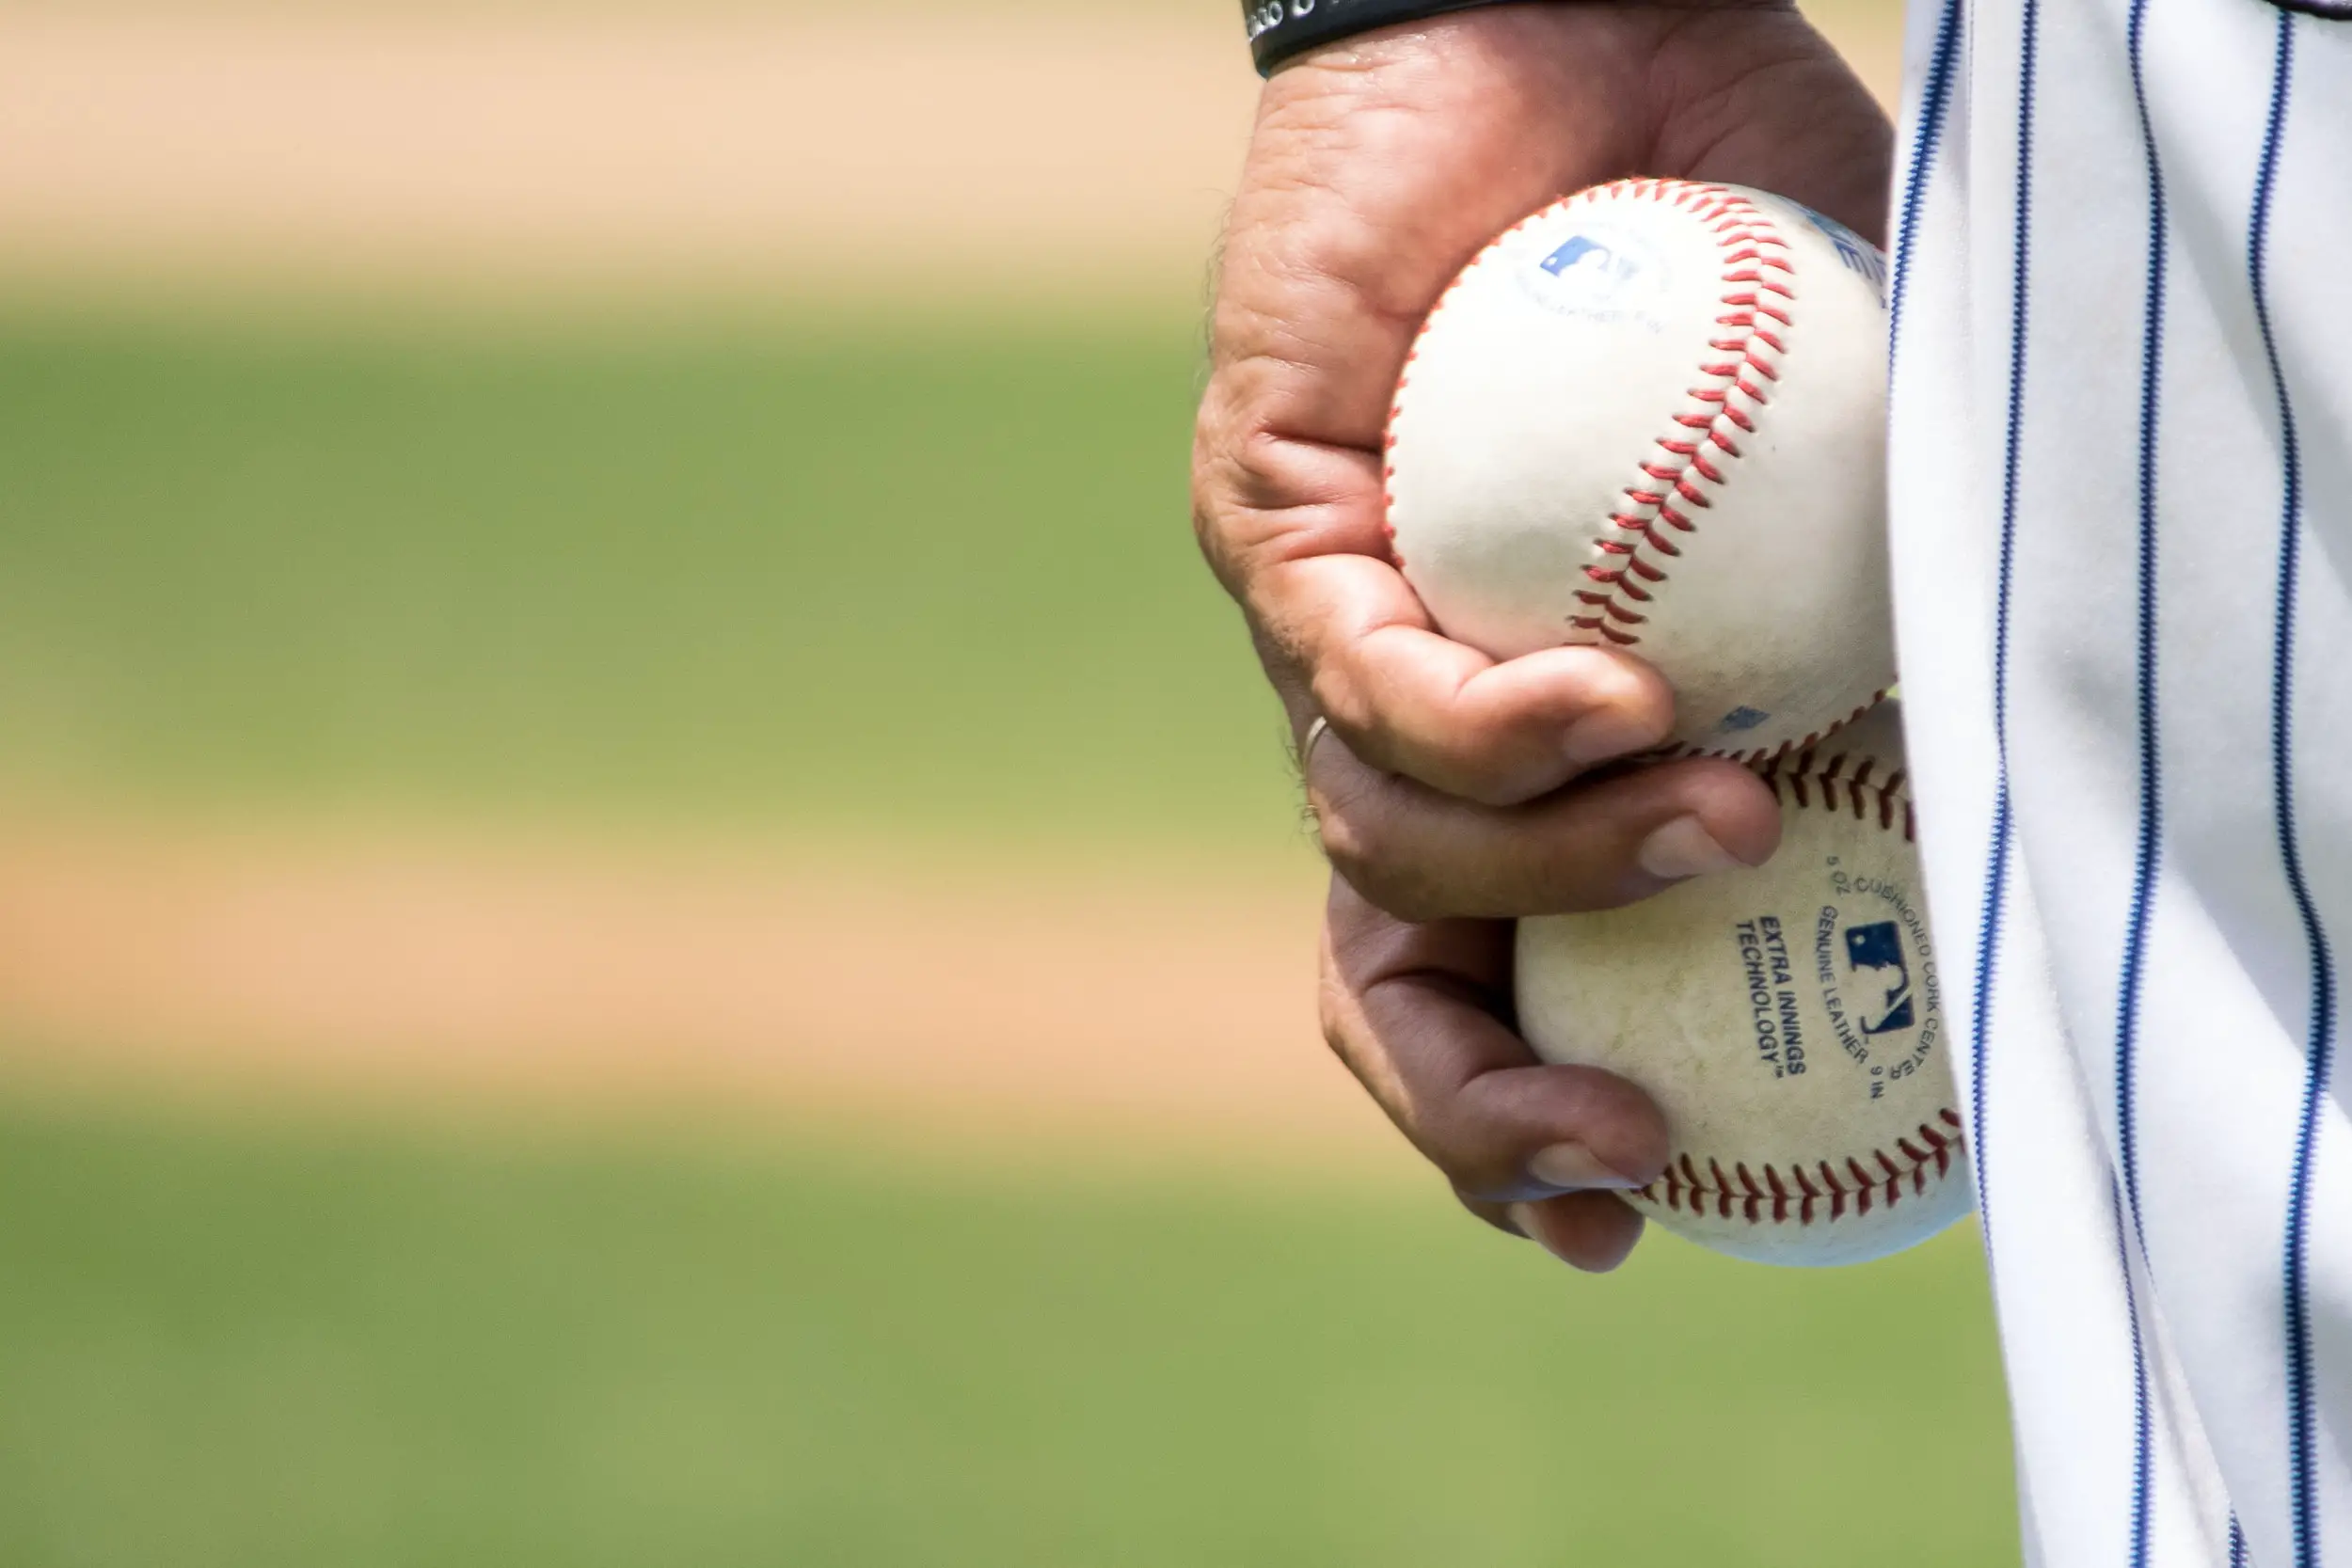 Why Change Baseballs When Hits Dirt?